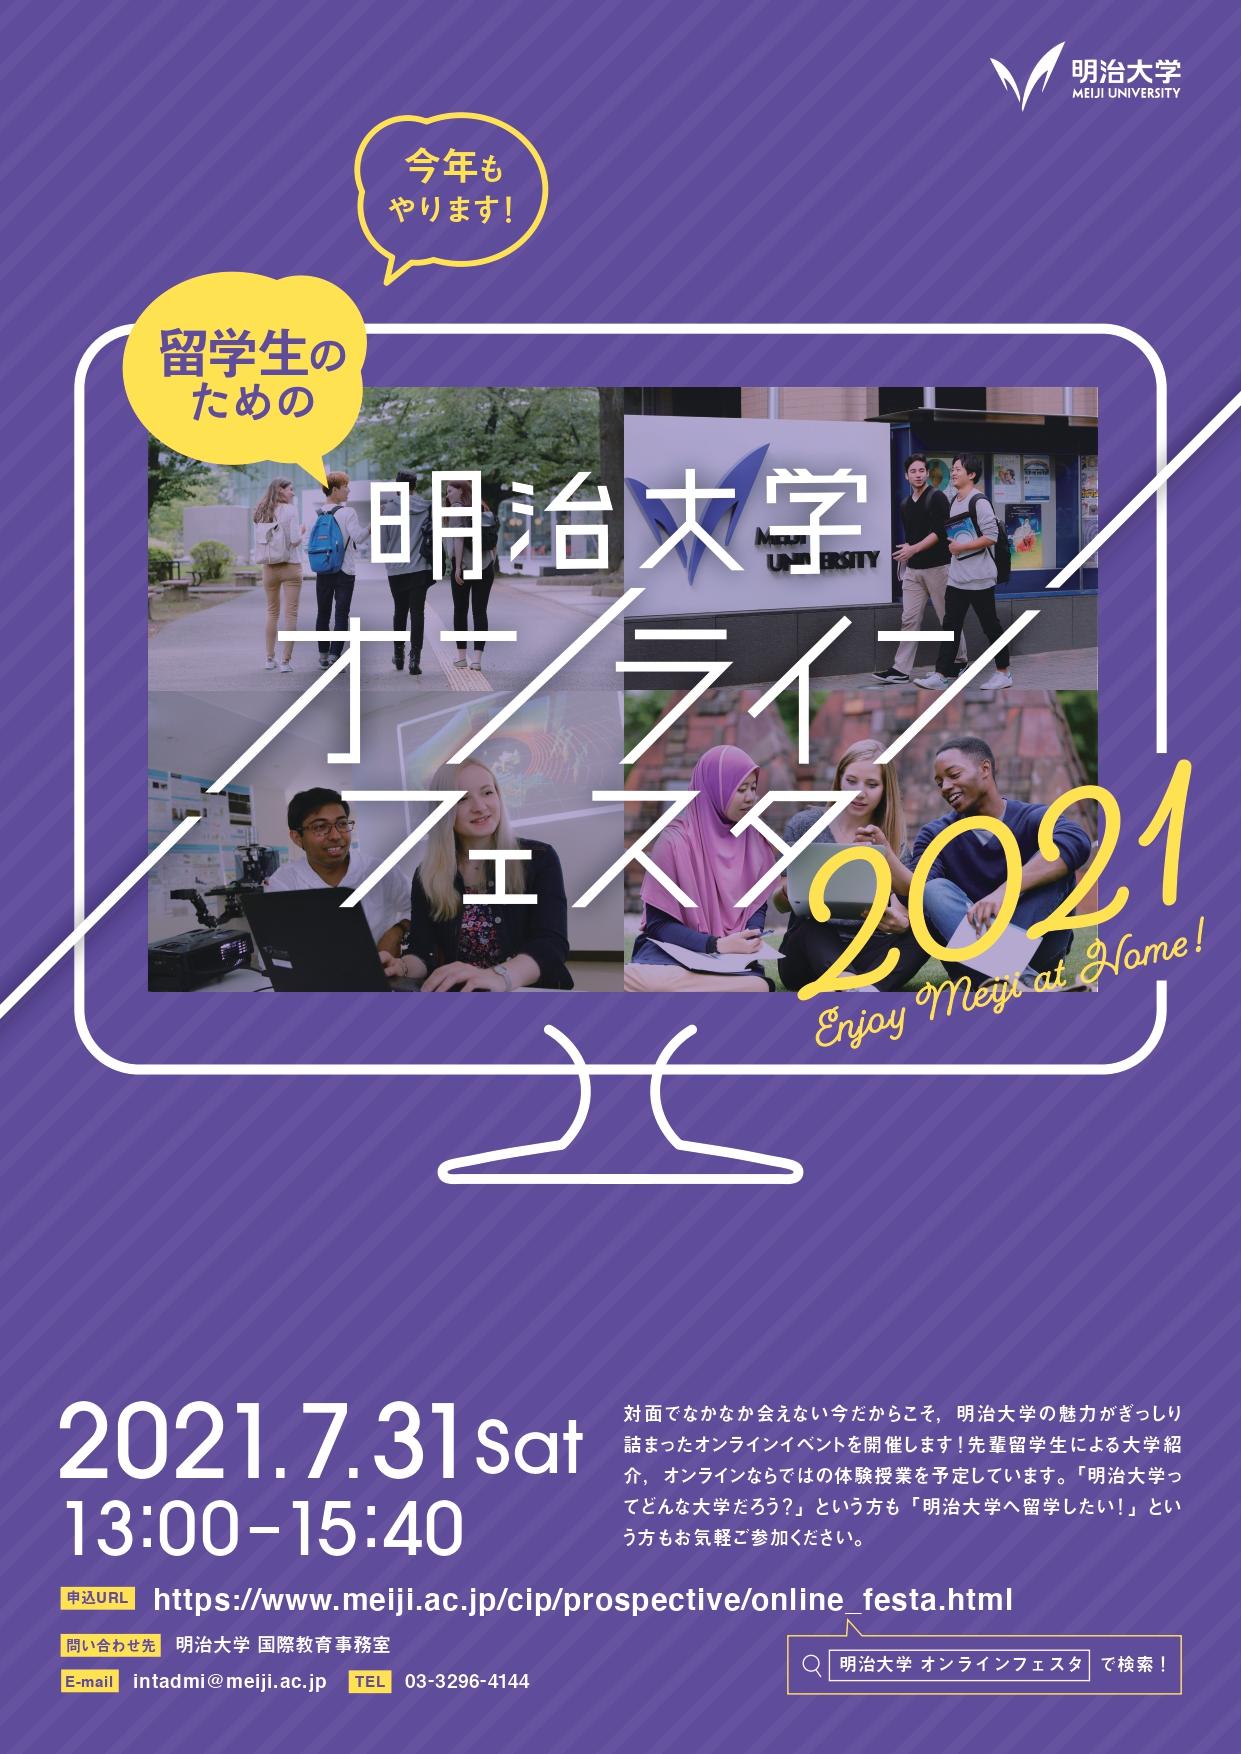 Enjoy Meiji at Home! 明大への留学を目指す外国人学生のためのオンラインイベント 6月～７月続々開催